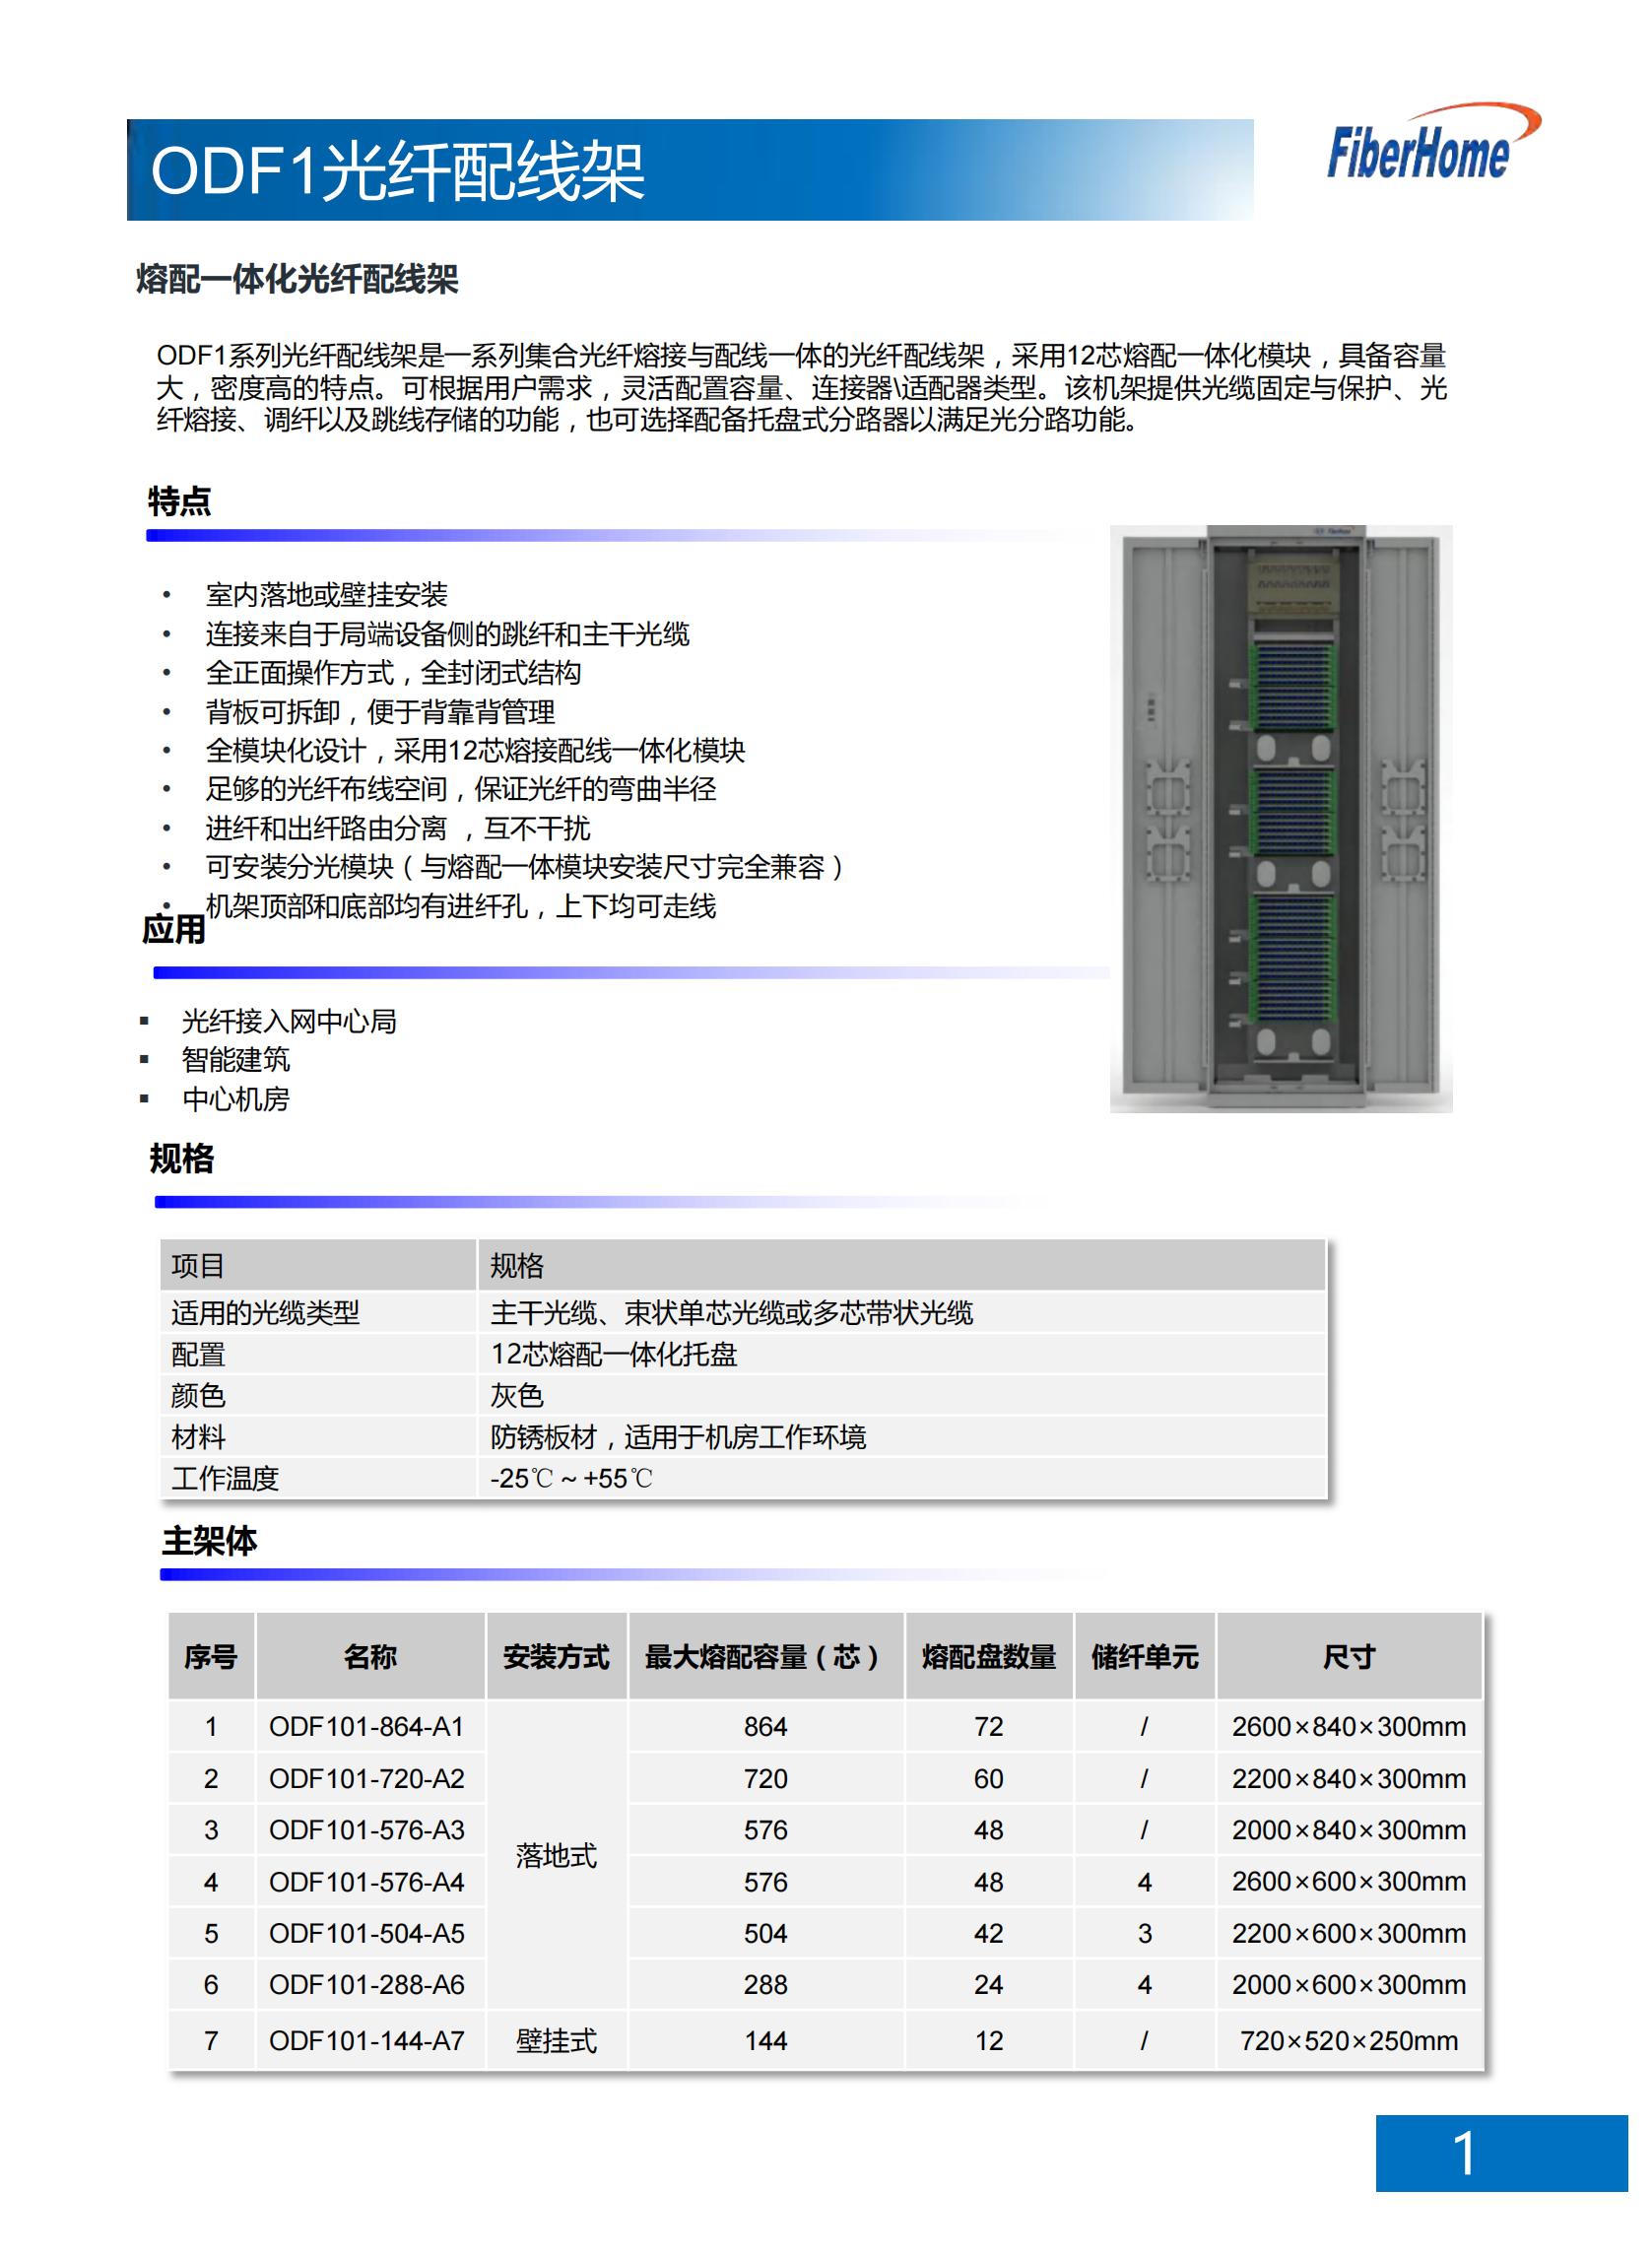 ODF101-576-A3 ODF光纤配线架 （576芯落地式 无子框型 不带熔纤盘）